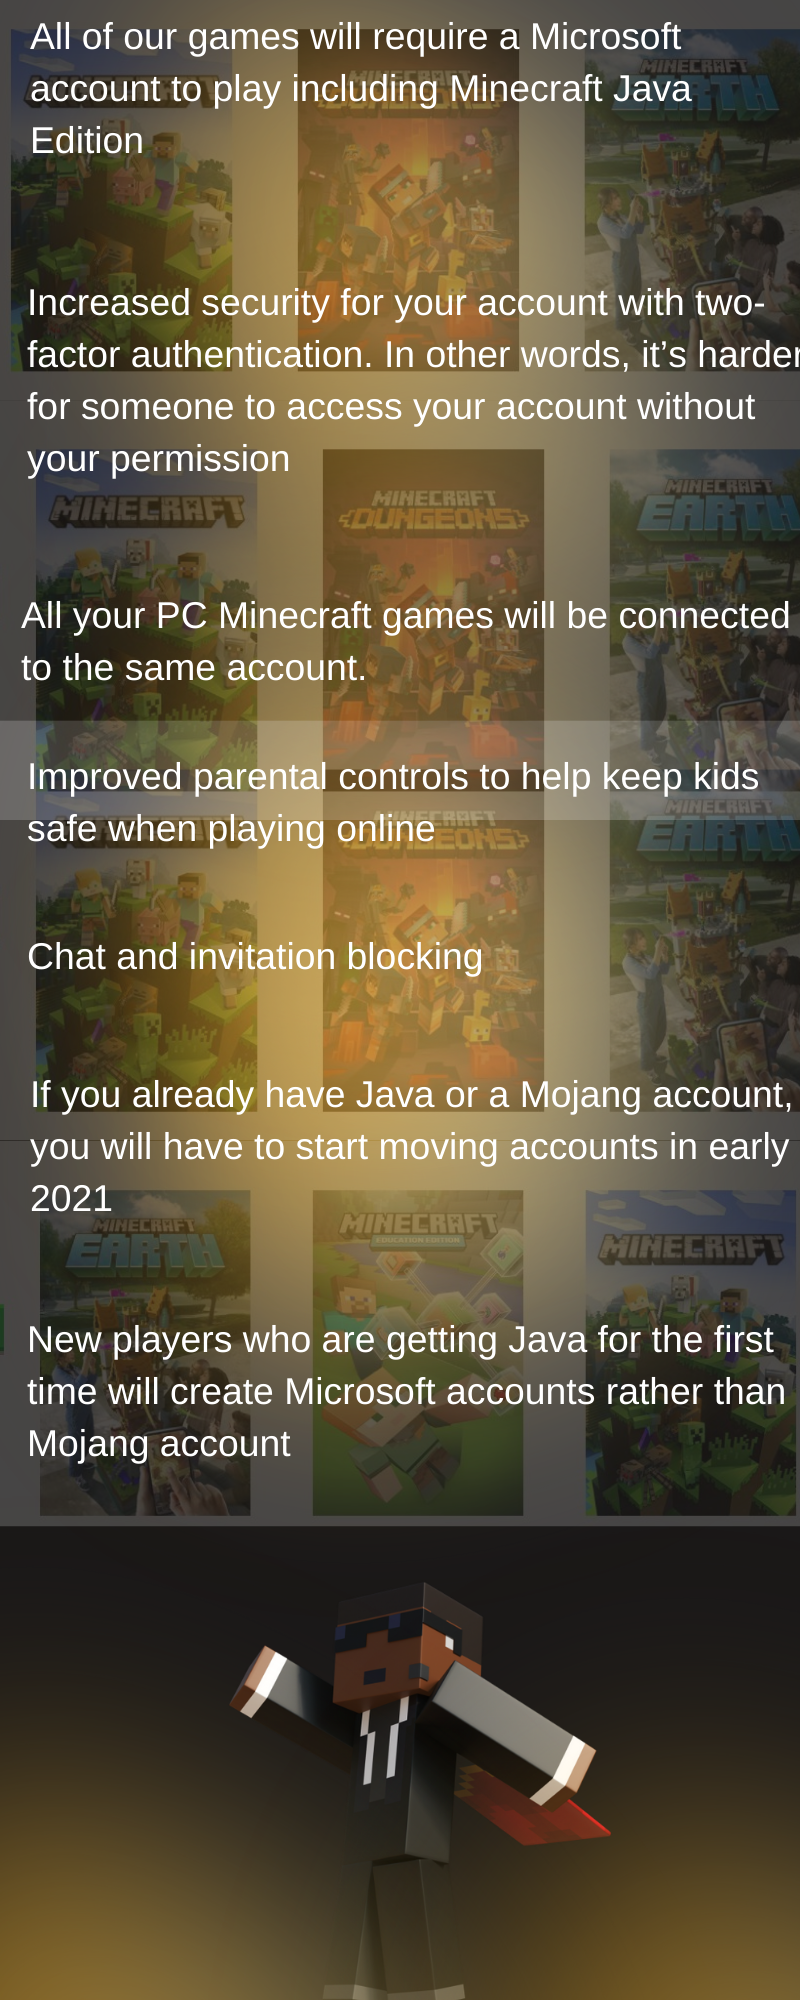 Parental Controls in Minecraft